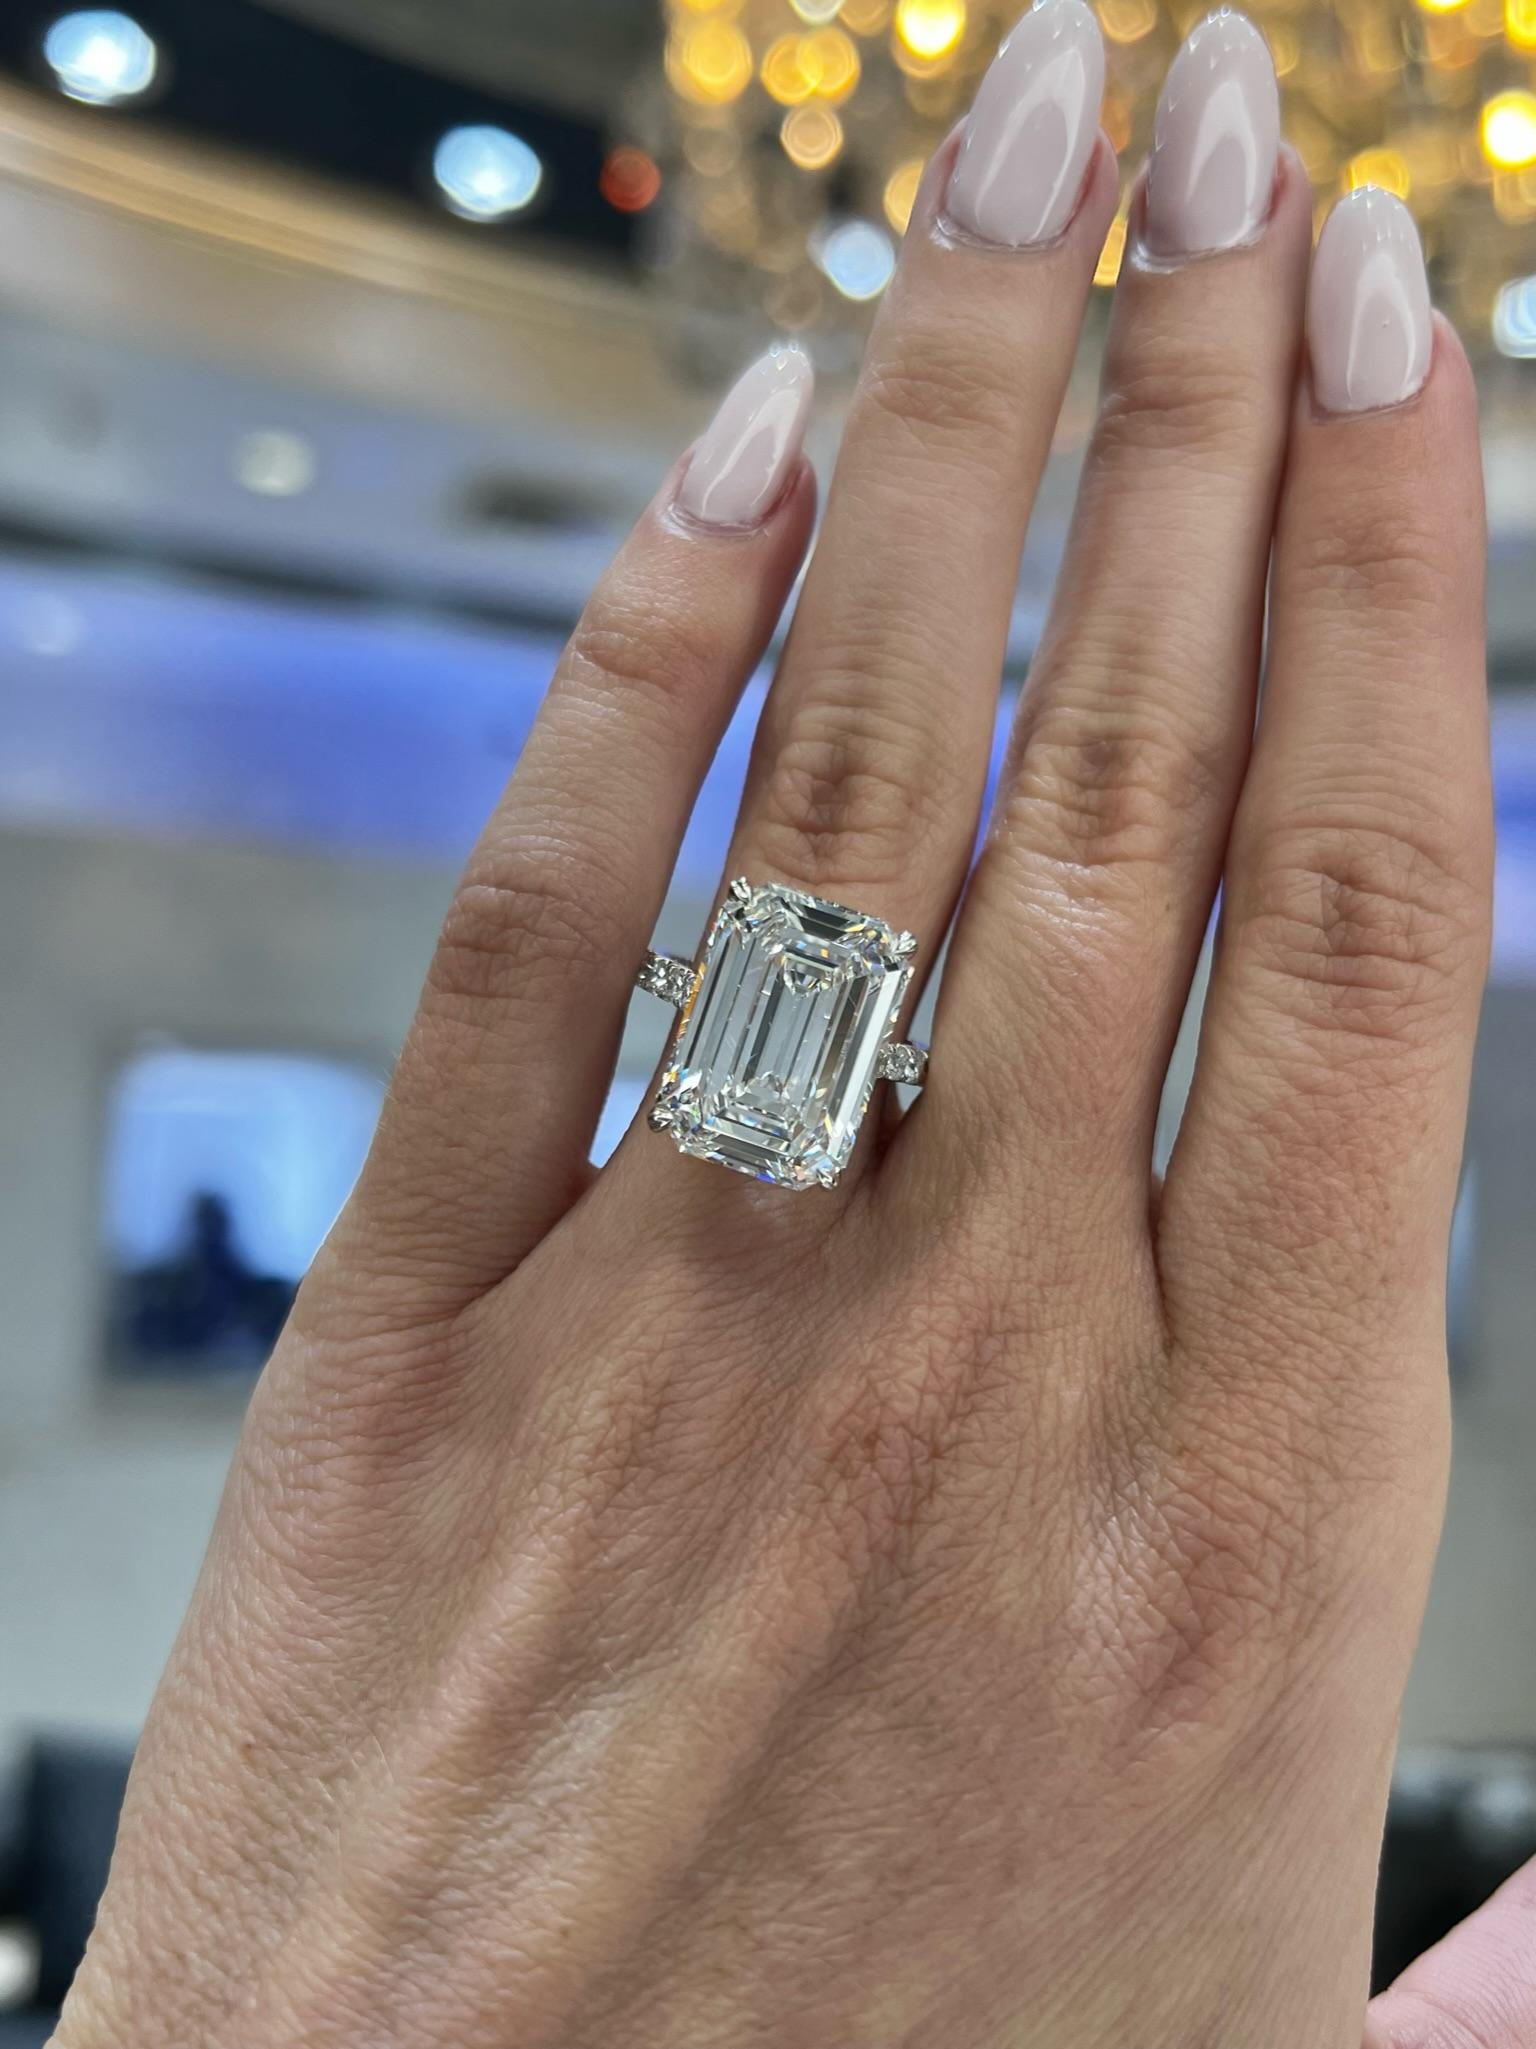 David Rosenberg 10.41 Carat Emerald Cut F VVS2 GIA Diamond Engagement Ring For Sale 3